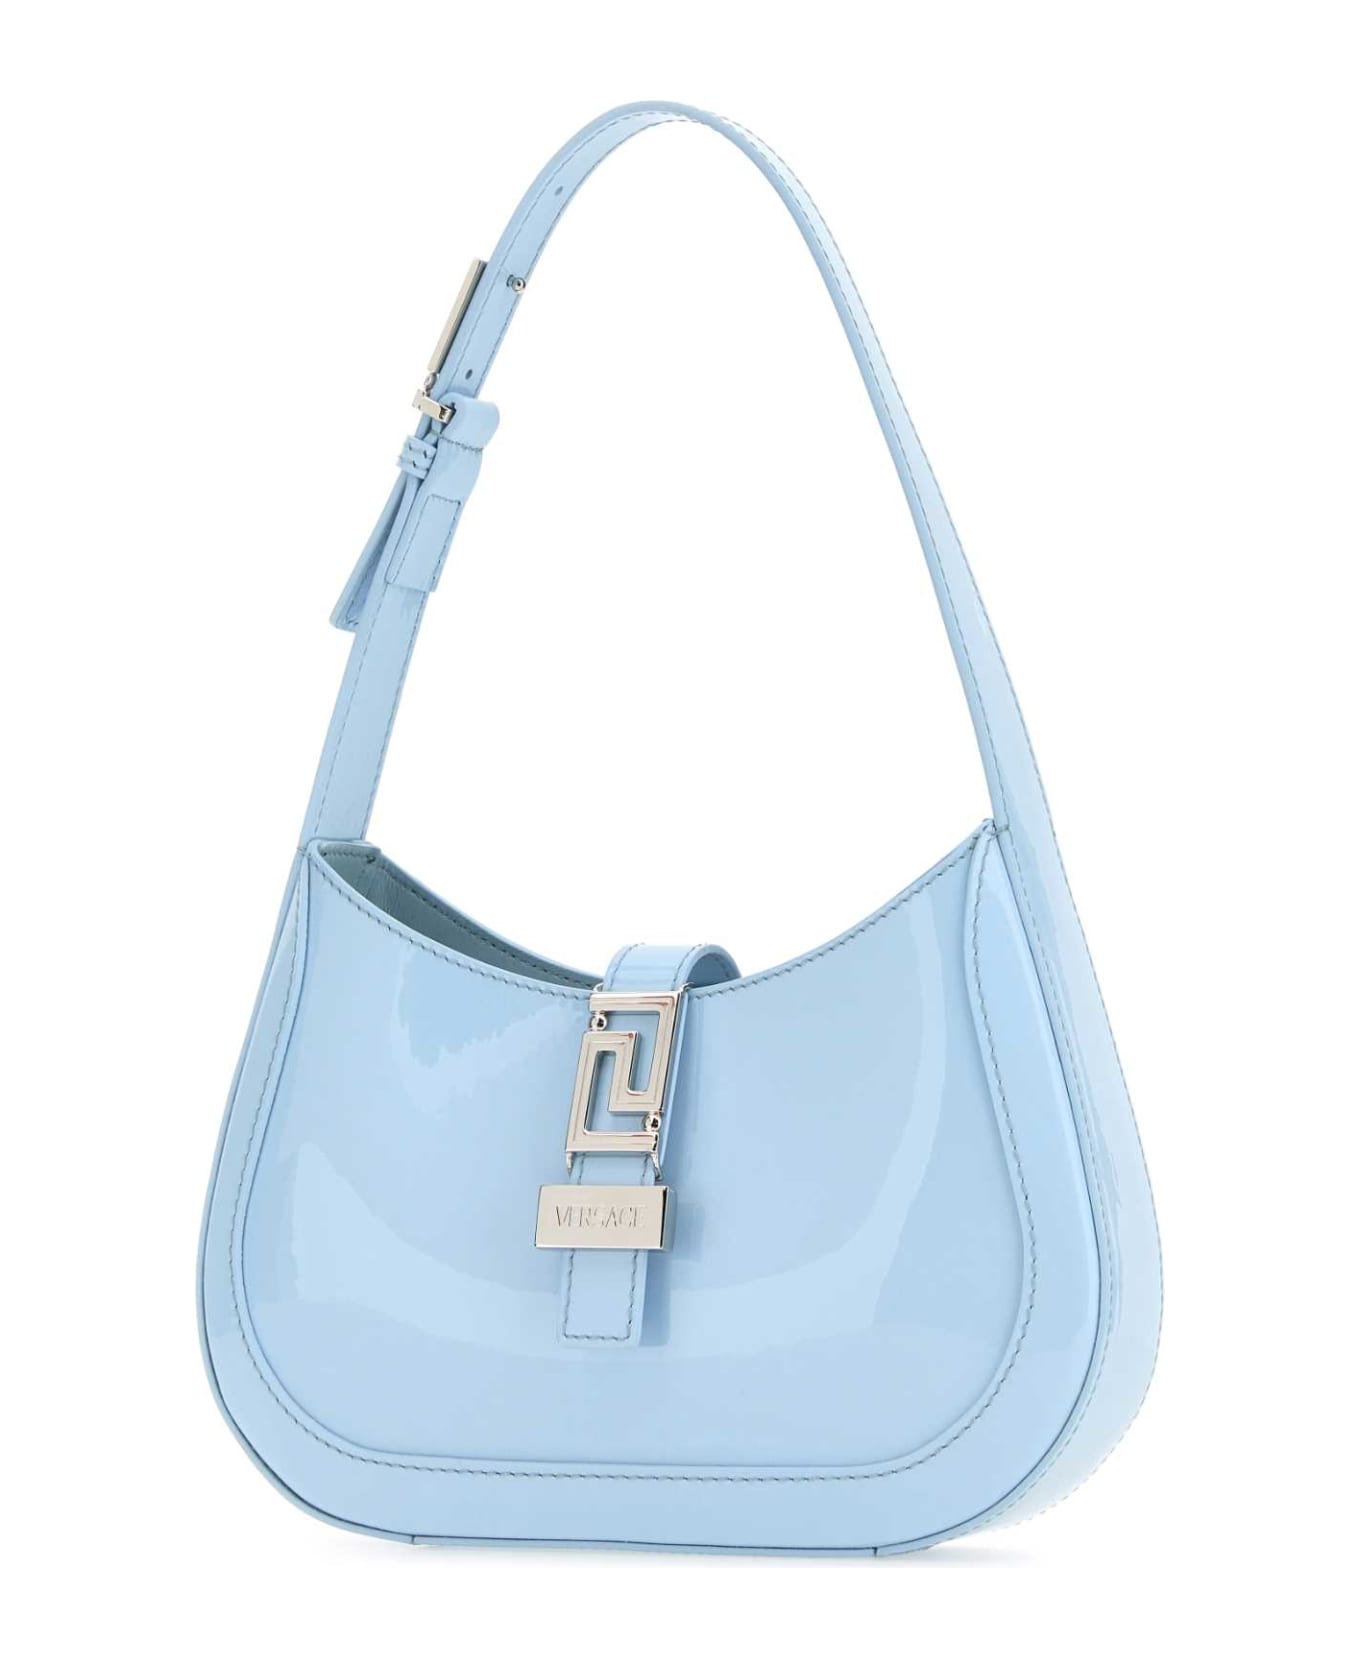 Versace Pastel Light-blue Leather Small Greca Goddess Shoulder Bag - 1VD6P95PASTELBLUEPALLADIUM